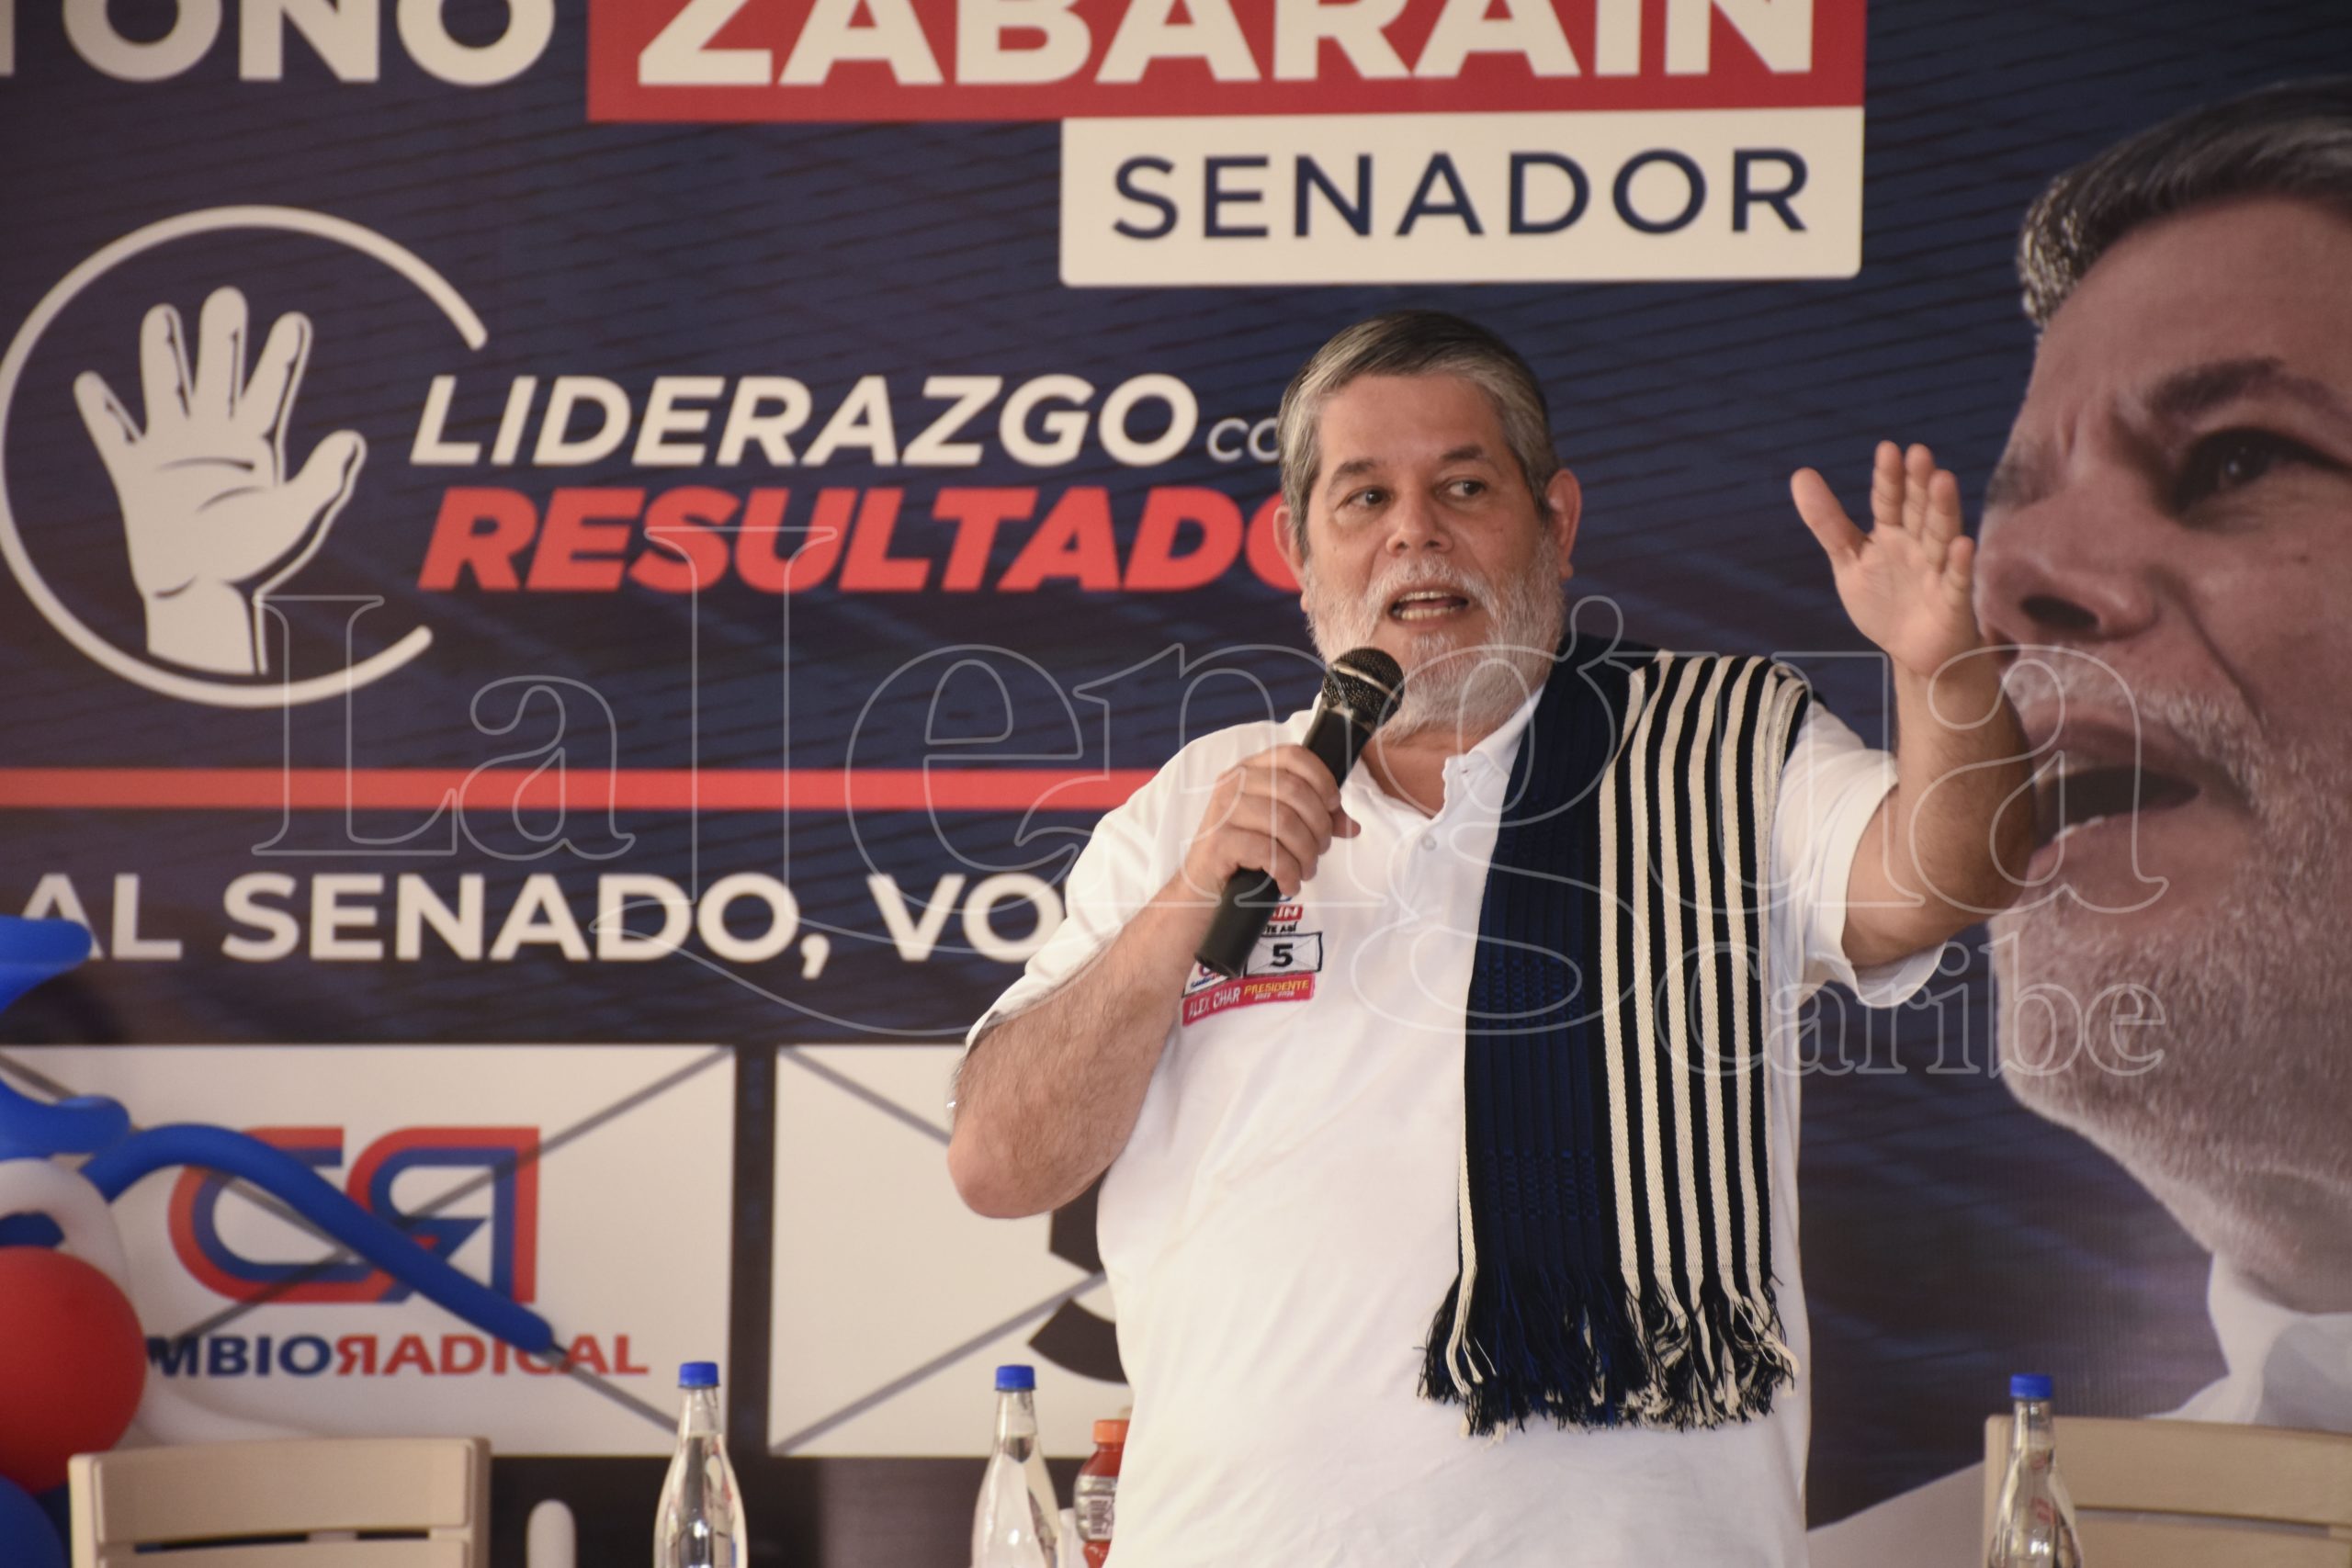 Masivo respaldo al candidato al Senado ‘Toño’ Zabarain en Montería